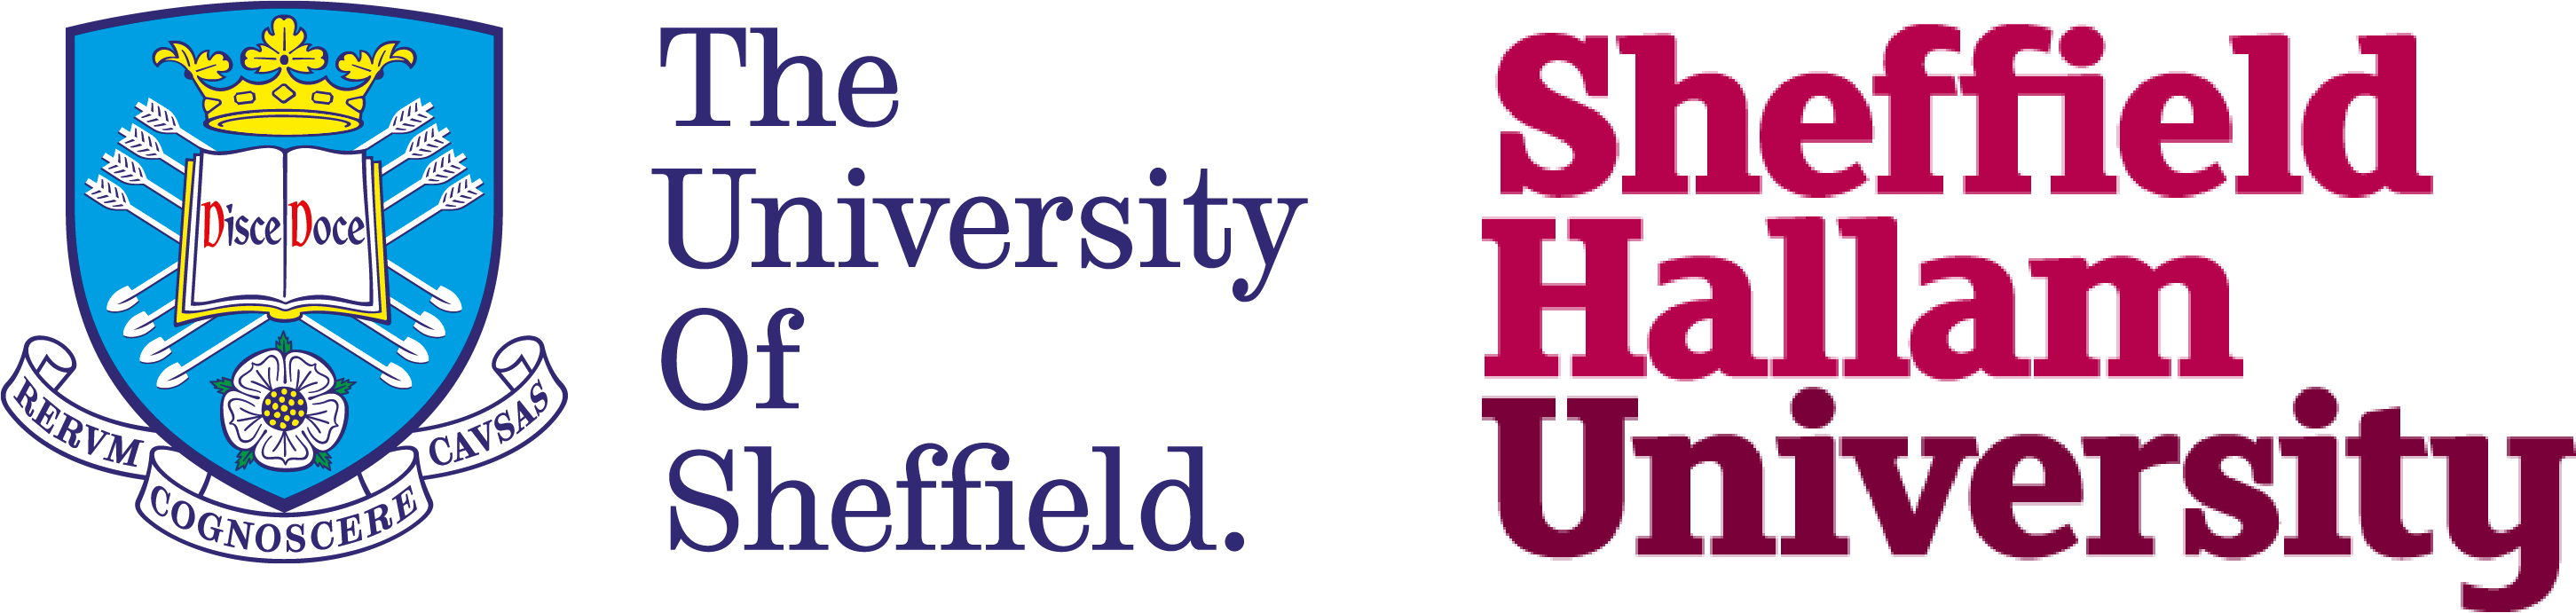 The University of Sheffield and Sheffield Hallam University logos